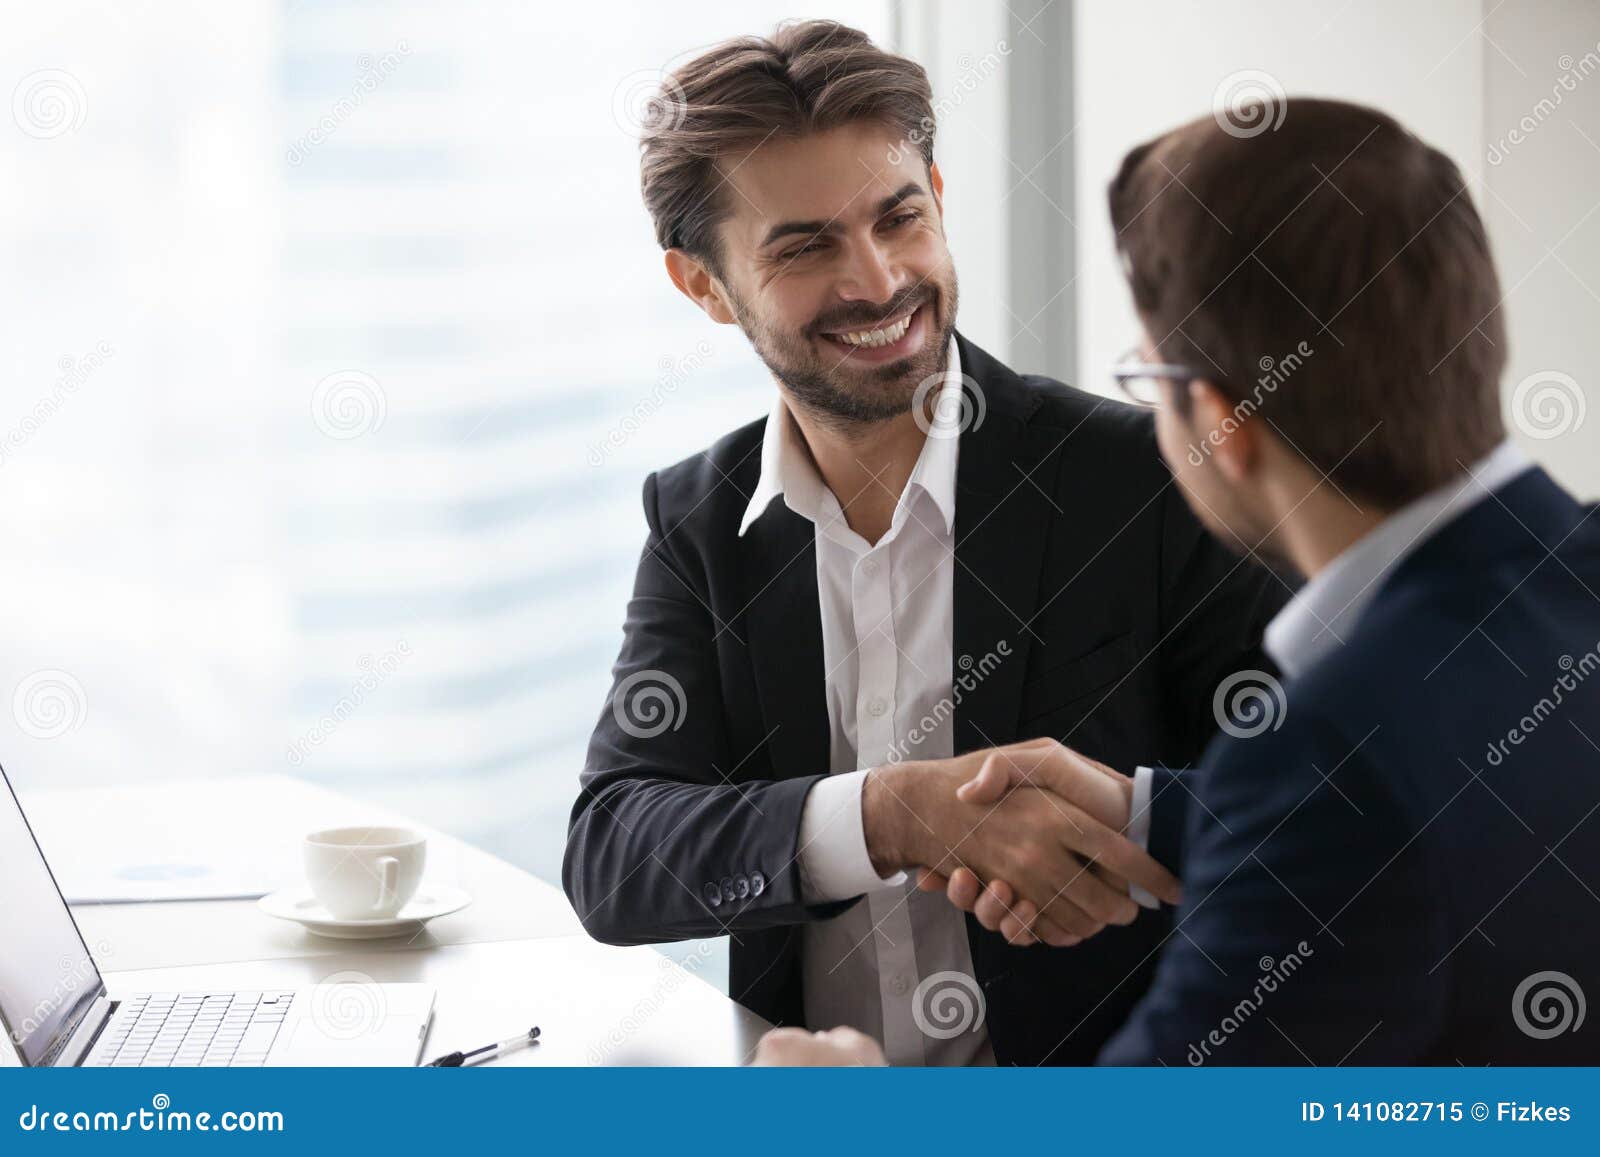 satisfied happy businessman in suit handshake business partner making deal